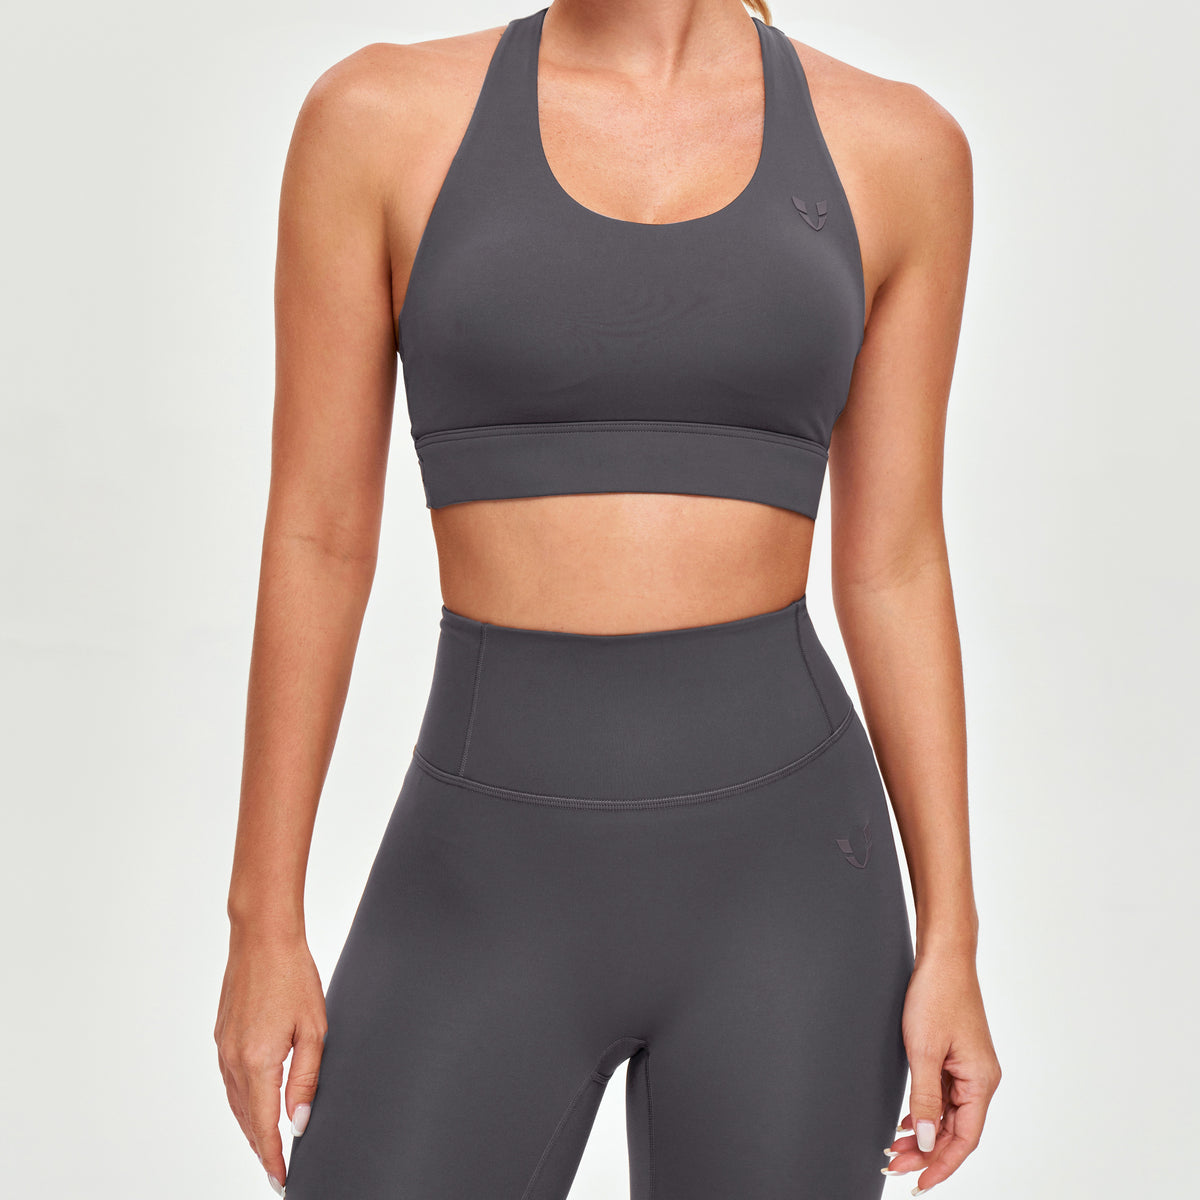 Odeerbi Lingerie for Women 2024 Sports Bras Shock-proof Underwear Running  Training Yoga Vest Wear Fitness Elasticity Bra Shorts Set Gray